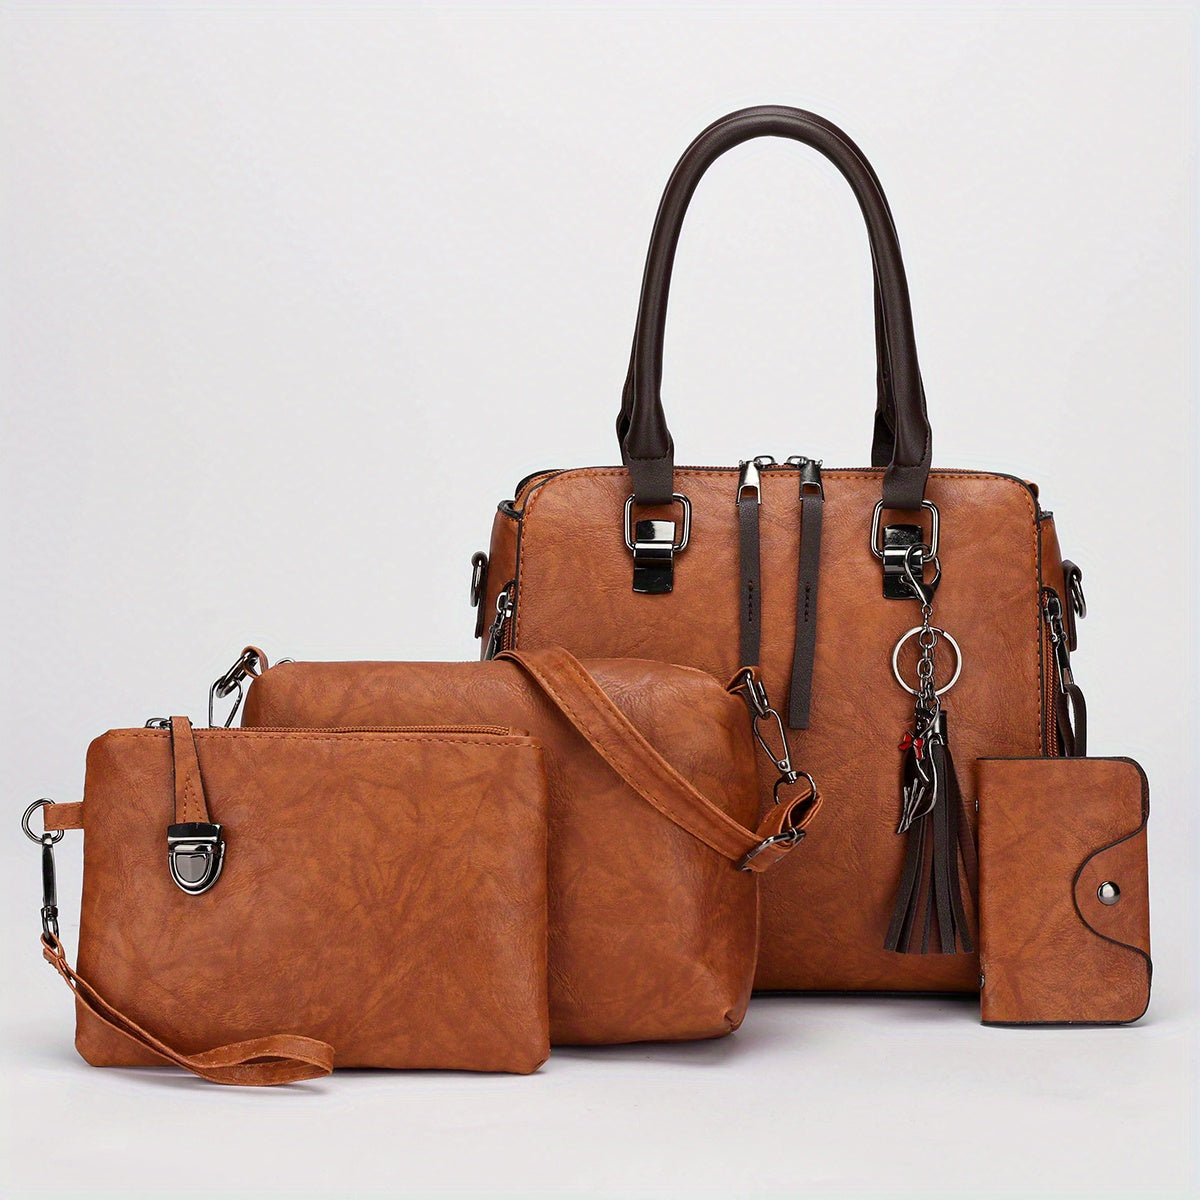 4pcs Retro Style Tote Bag Set, Stylish Faux Leather Handbag With Crossbody Bag, Wristlet Clutch Purse, Credit Card Holder